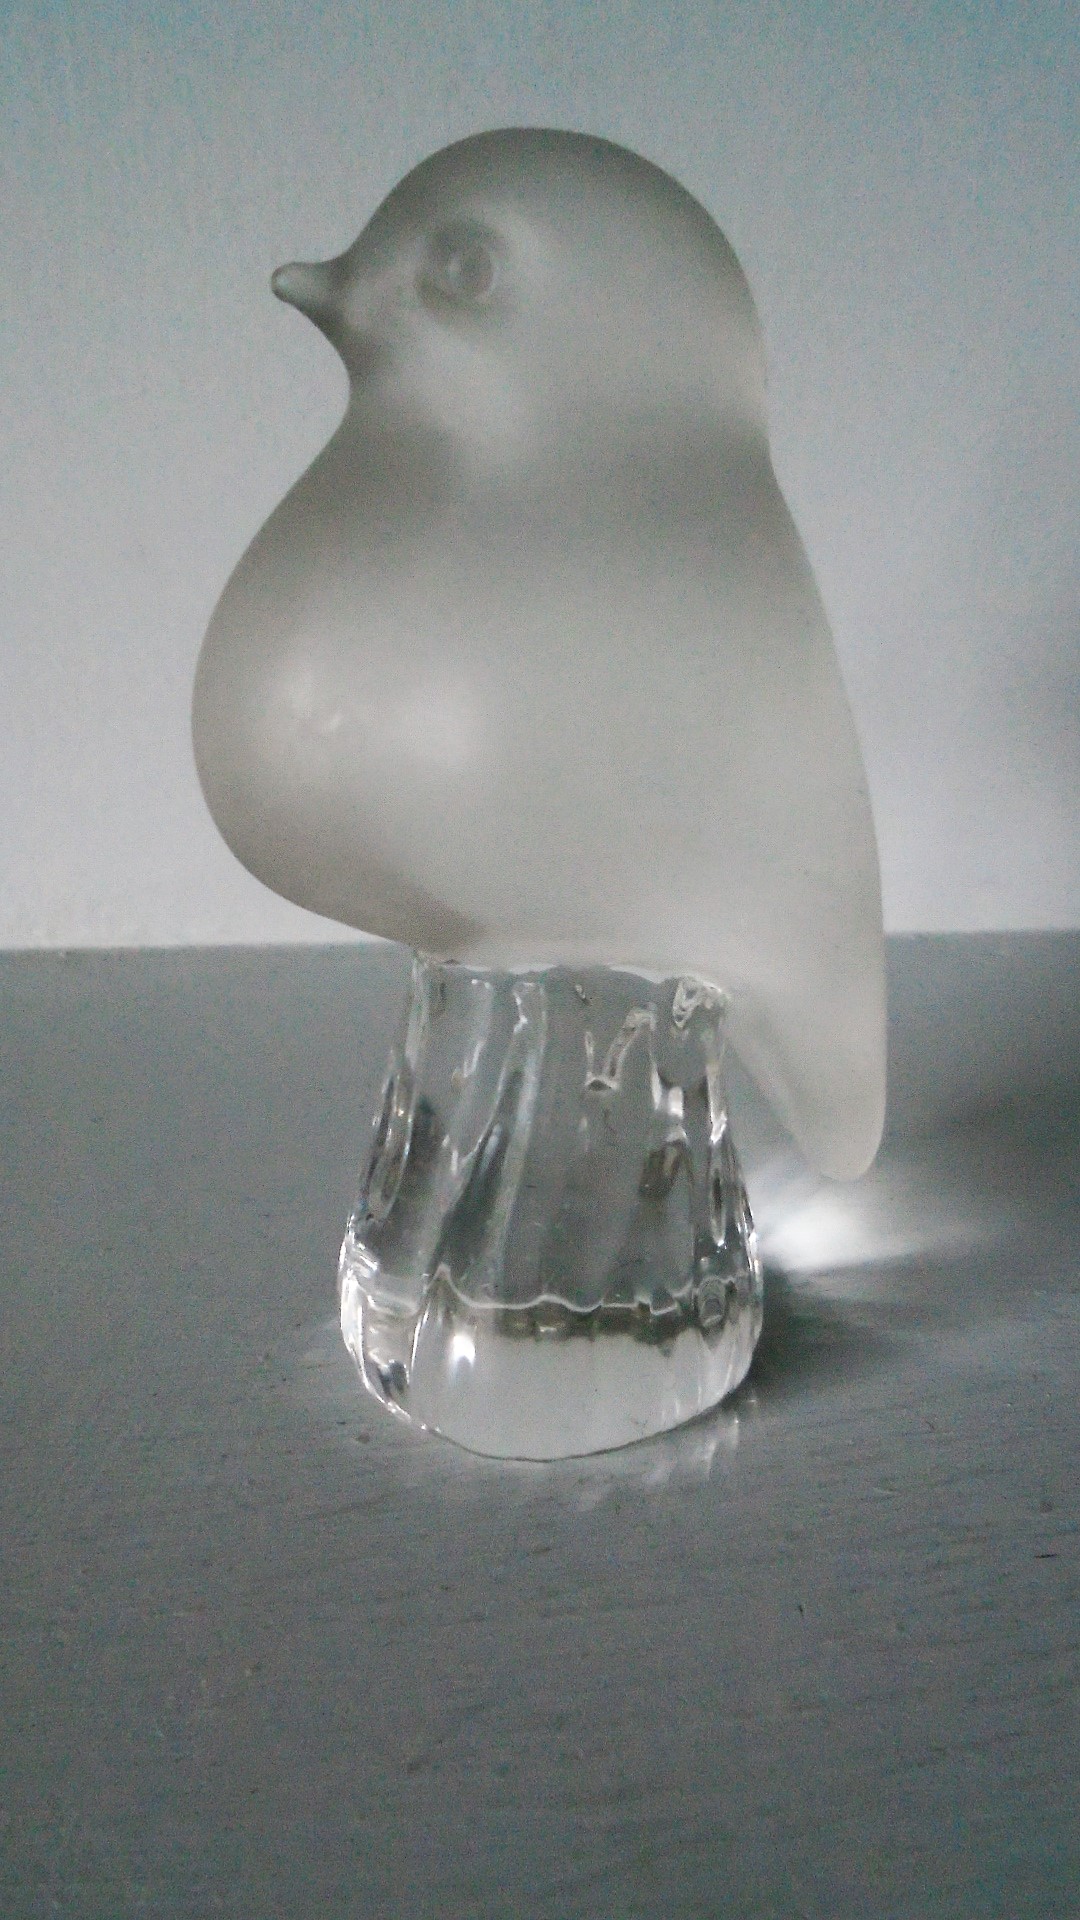 Cute Late 20th century Vintage Crystal Glass Bird Figurine from Swedish Glass maker Reijmyre.